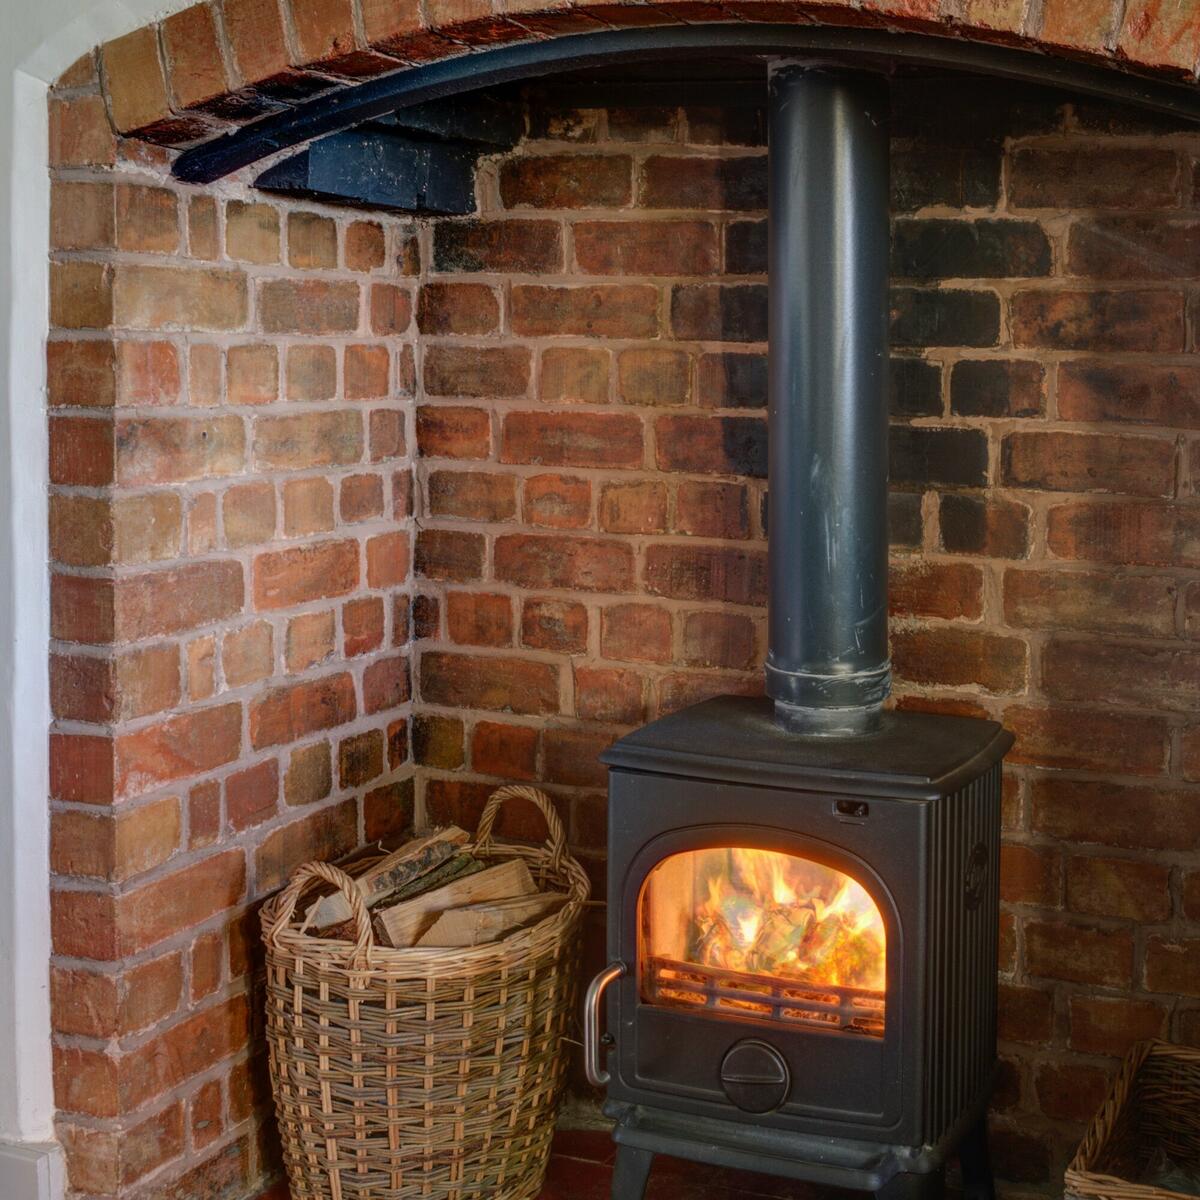 Wood burner in the main sitting room